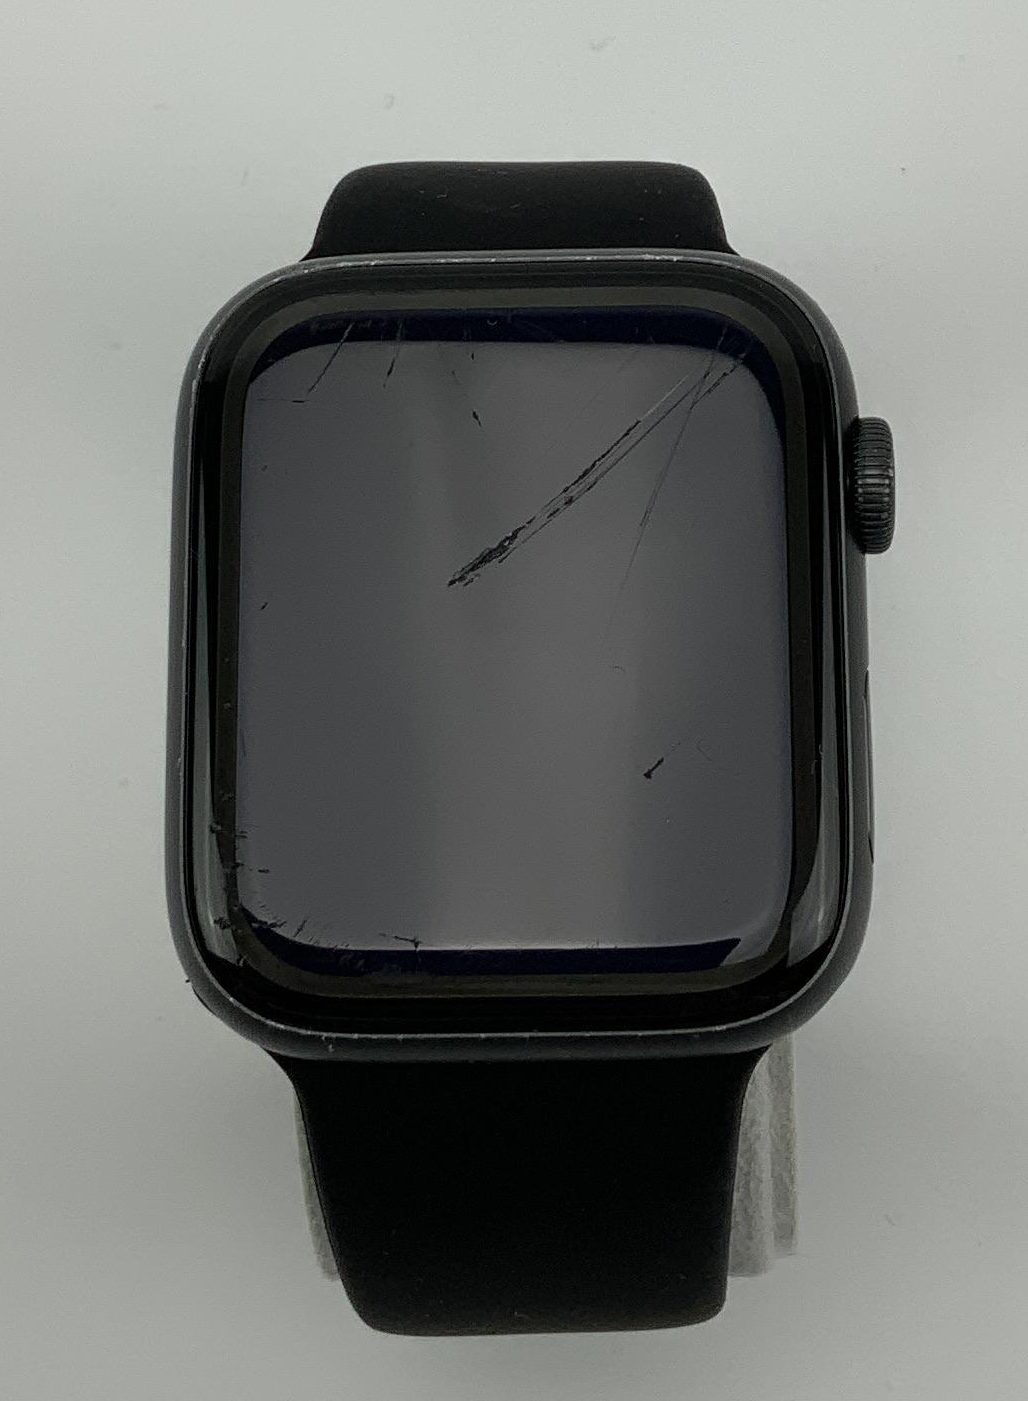 Watch Series 5 Aluminum (44mm), Space Gray, immagine 1